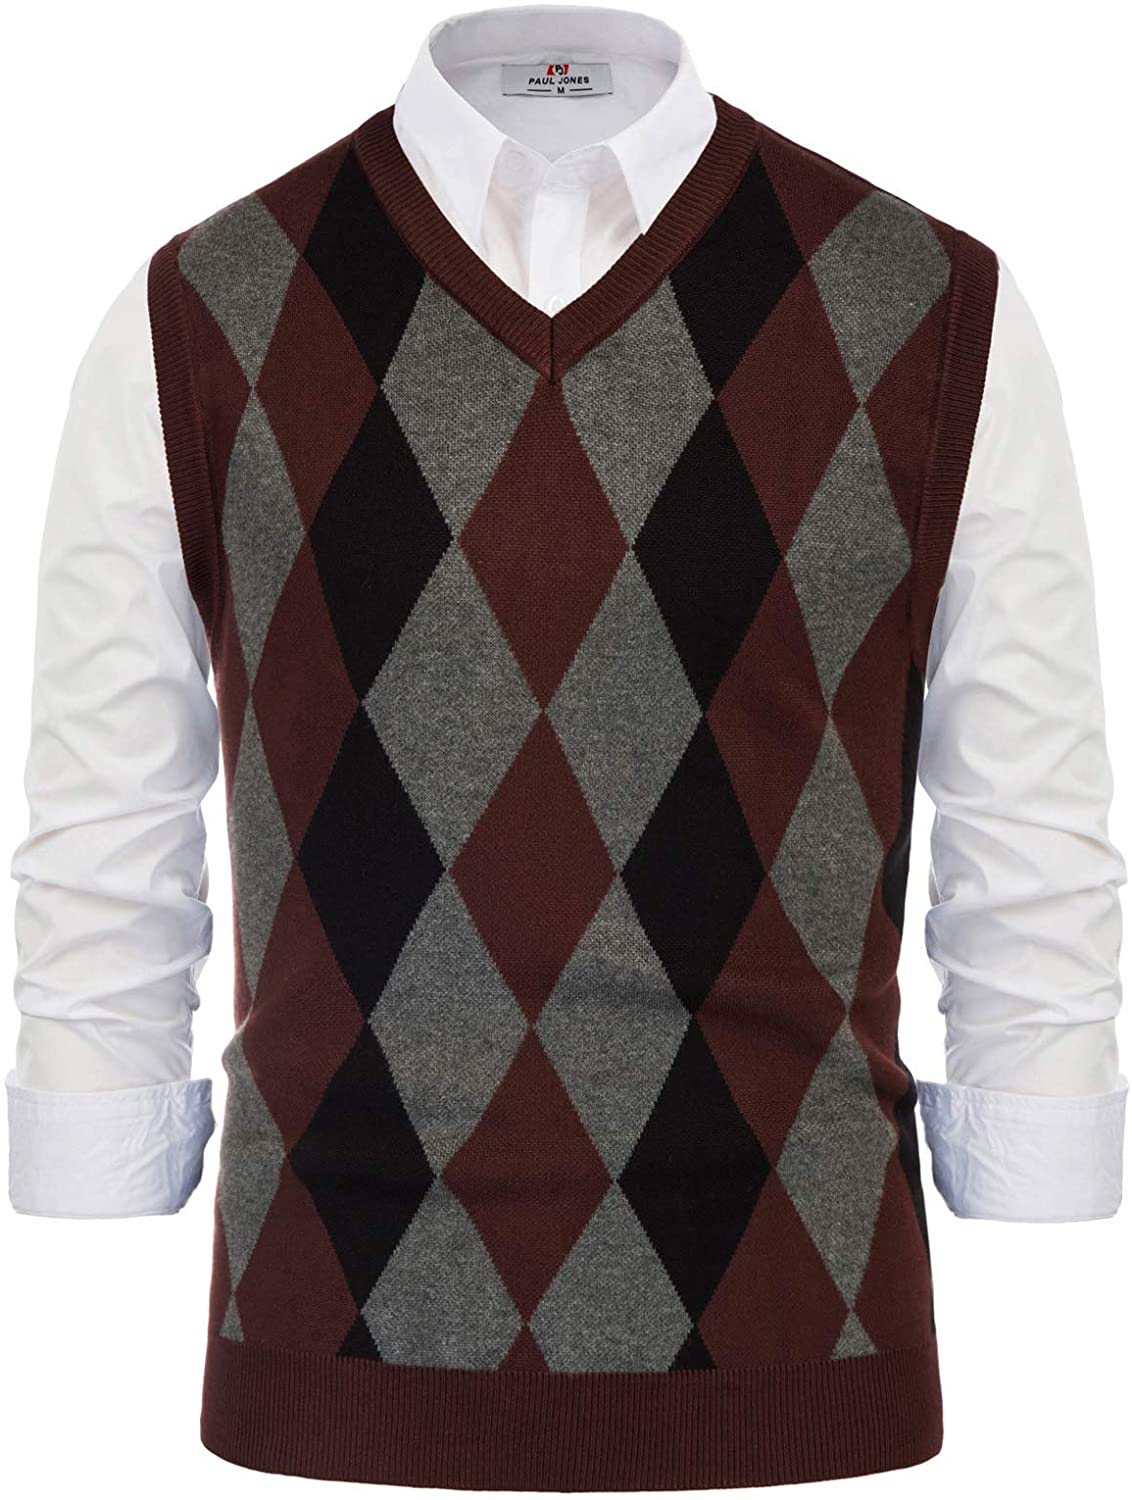 PJ PAUL JONES Mens Casual Argyle Sweater Vest V-Neck Sleeveless Pullover Knitwear Vests 